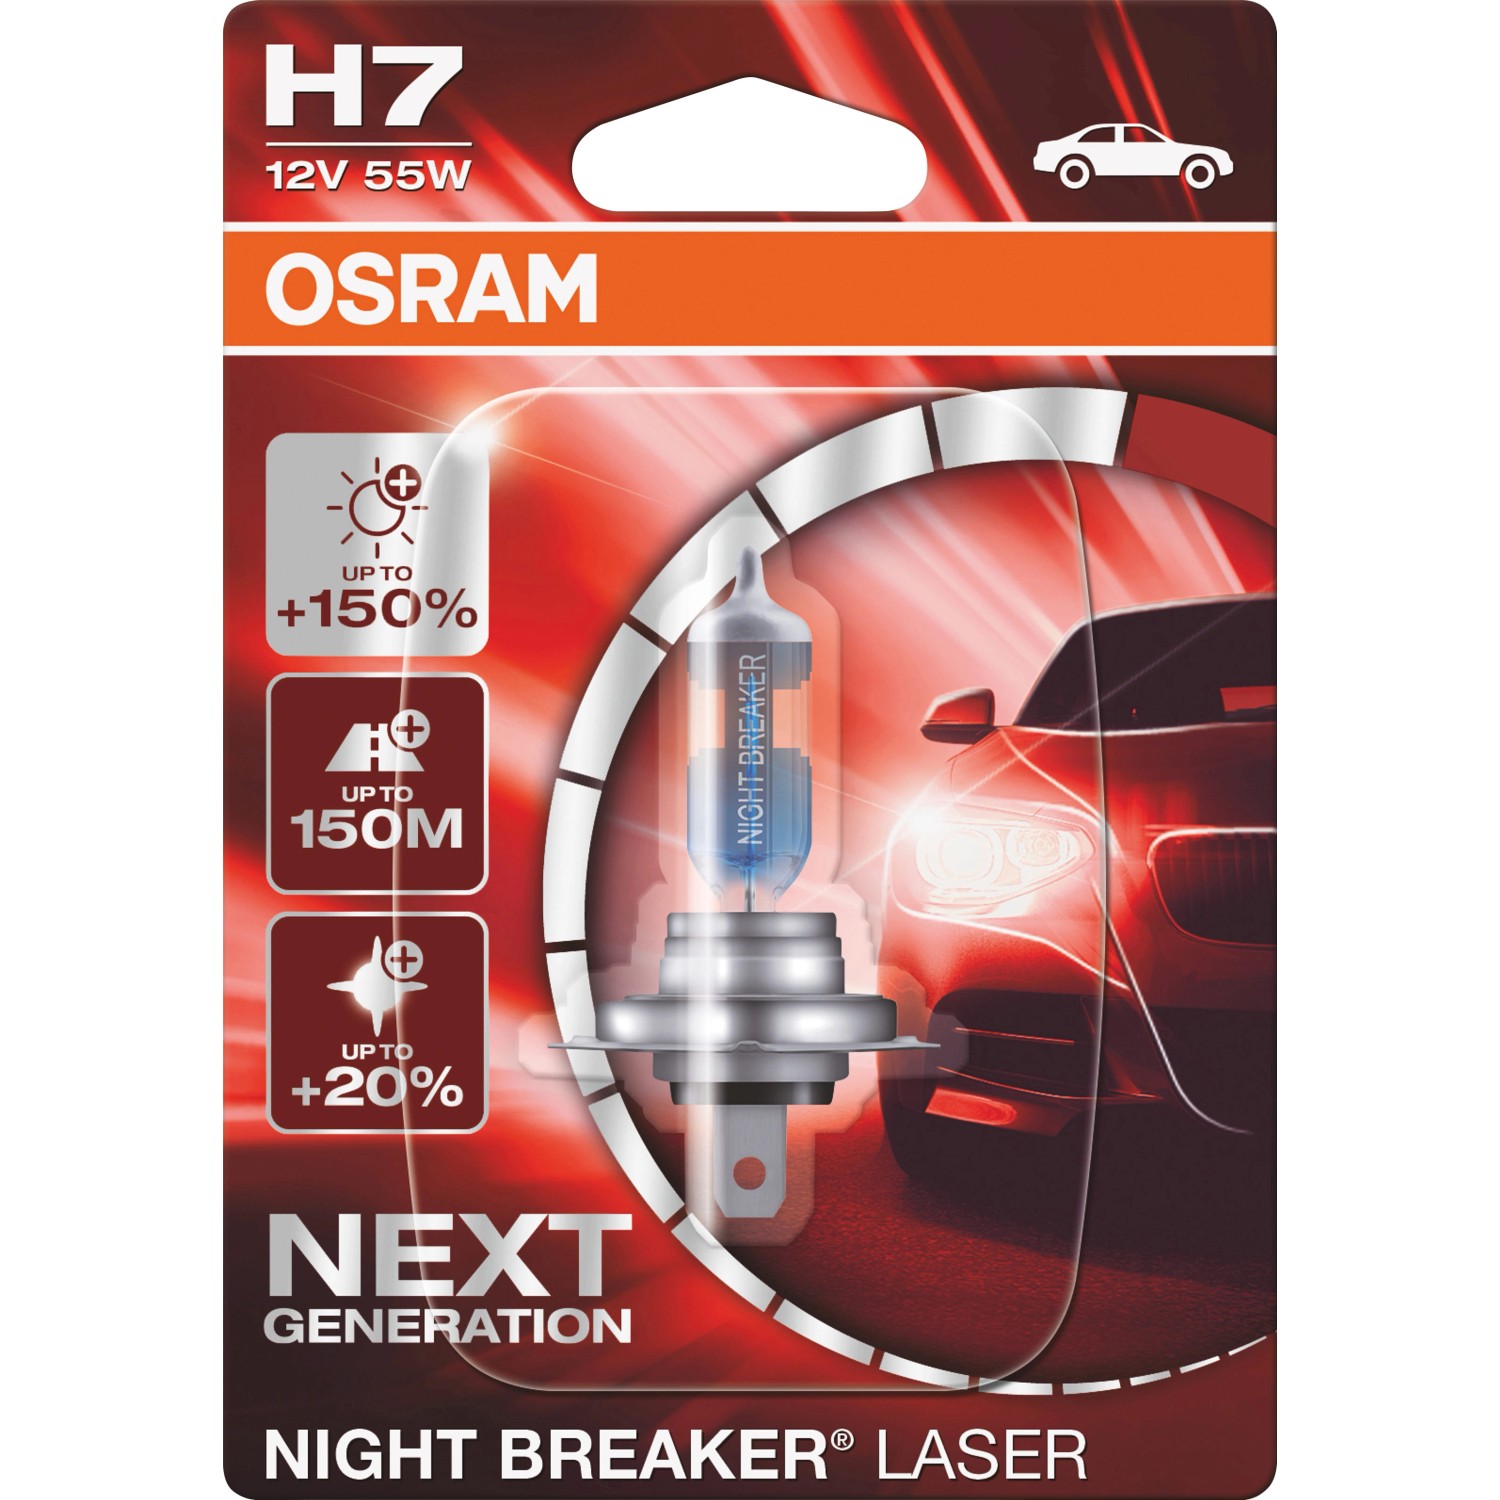 Osram H7 night breaker laser +200 duo